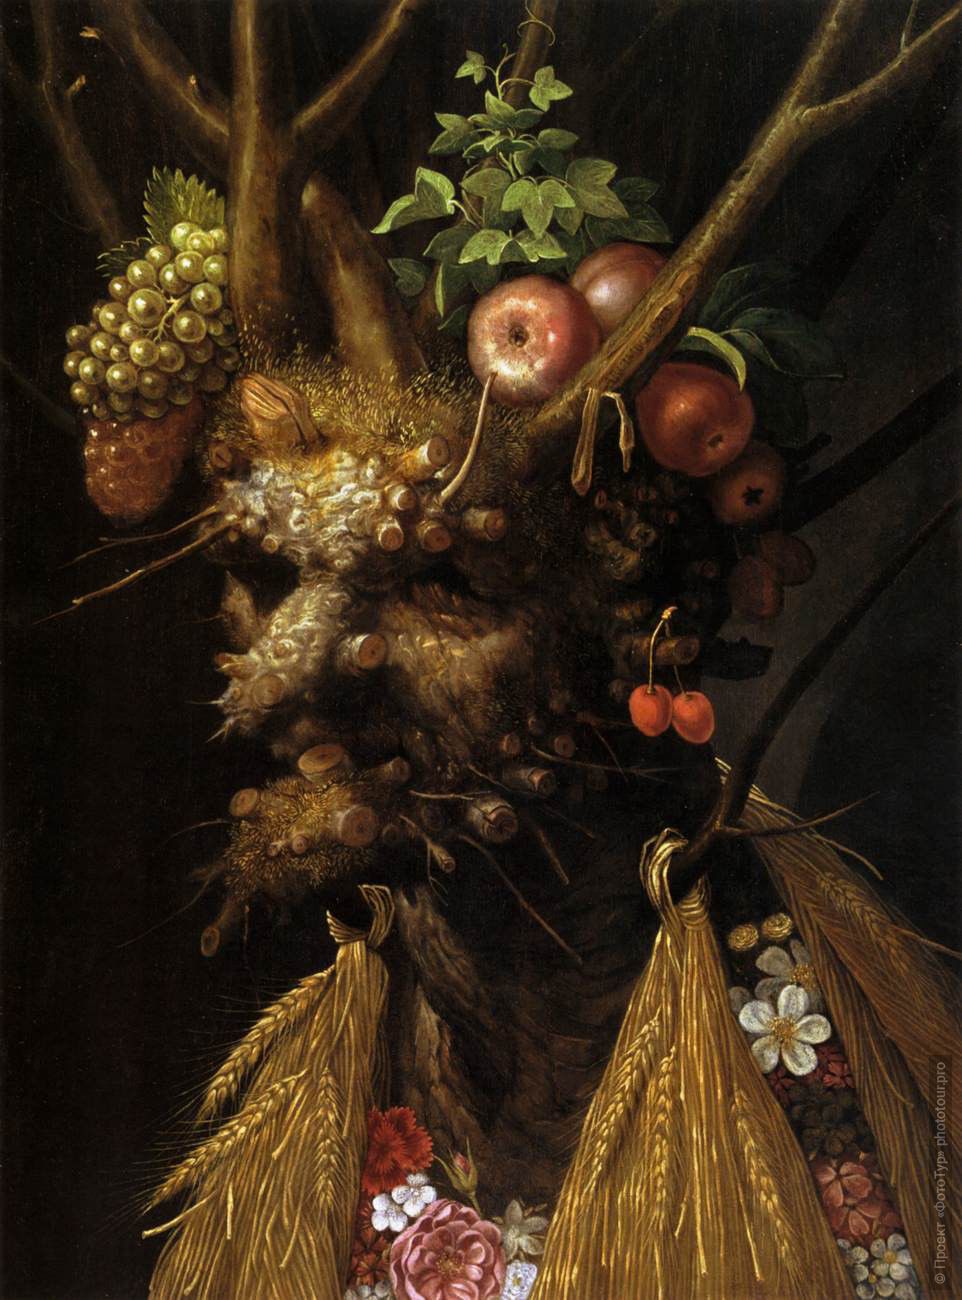      , 1590. The Four Seasons in one Head c. 1590.  . Giuseppe Arcimboldo.